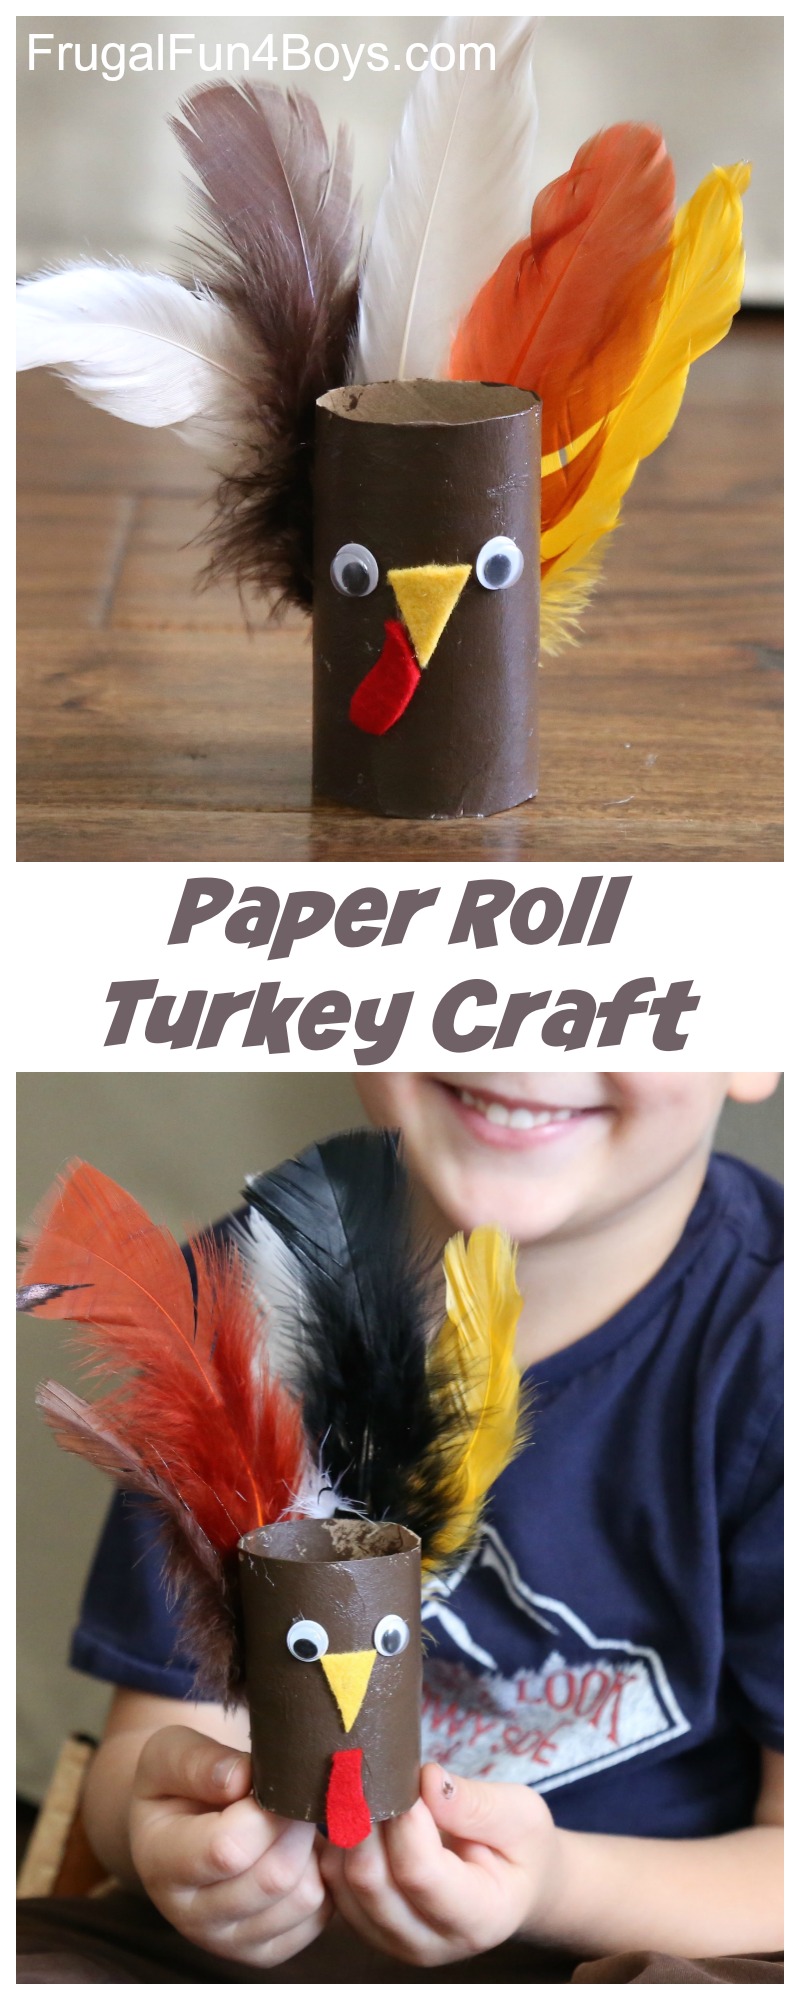 Paper Roll Turkey Craft for Kids